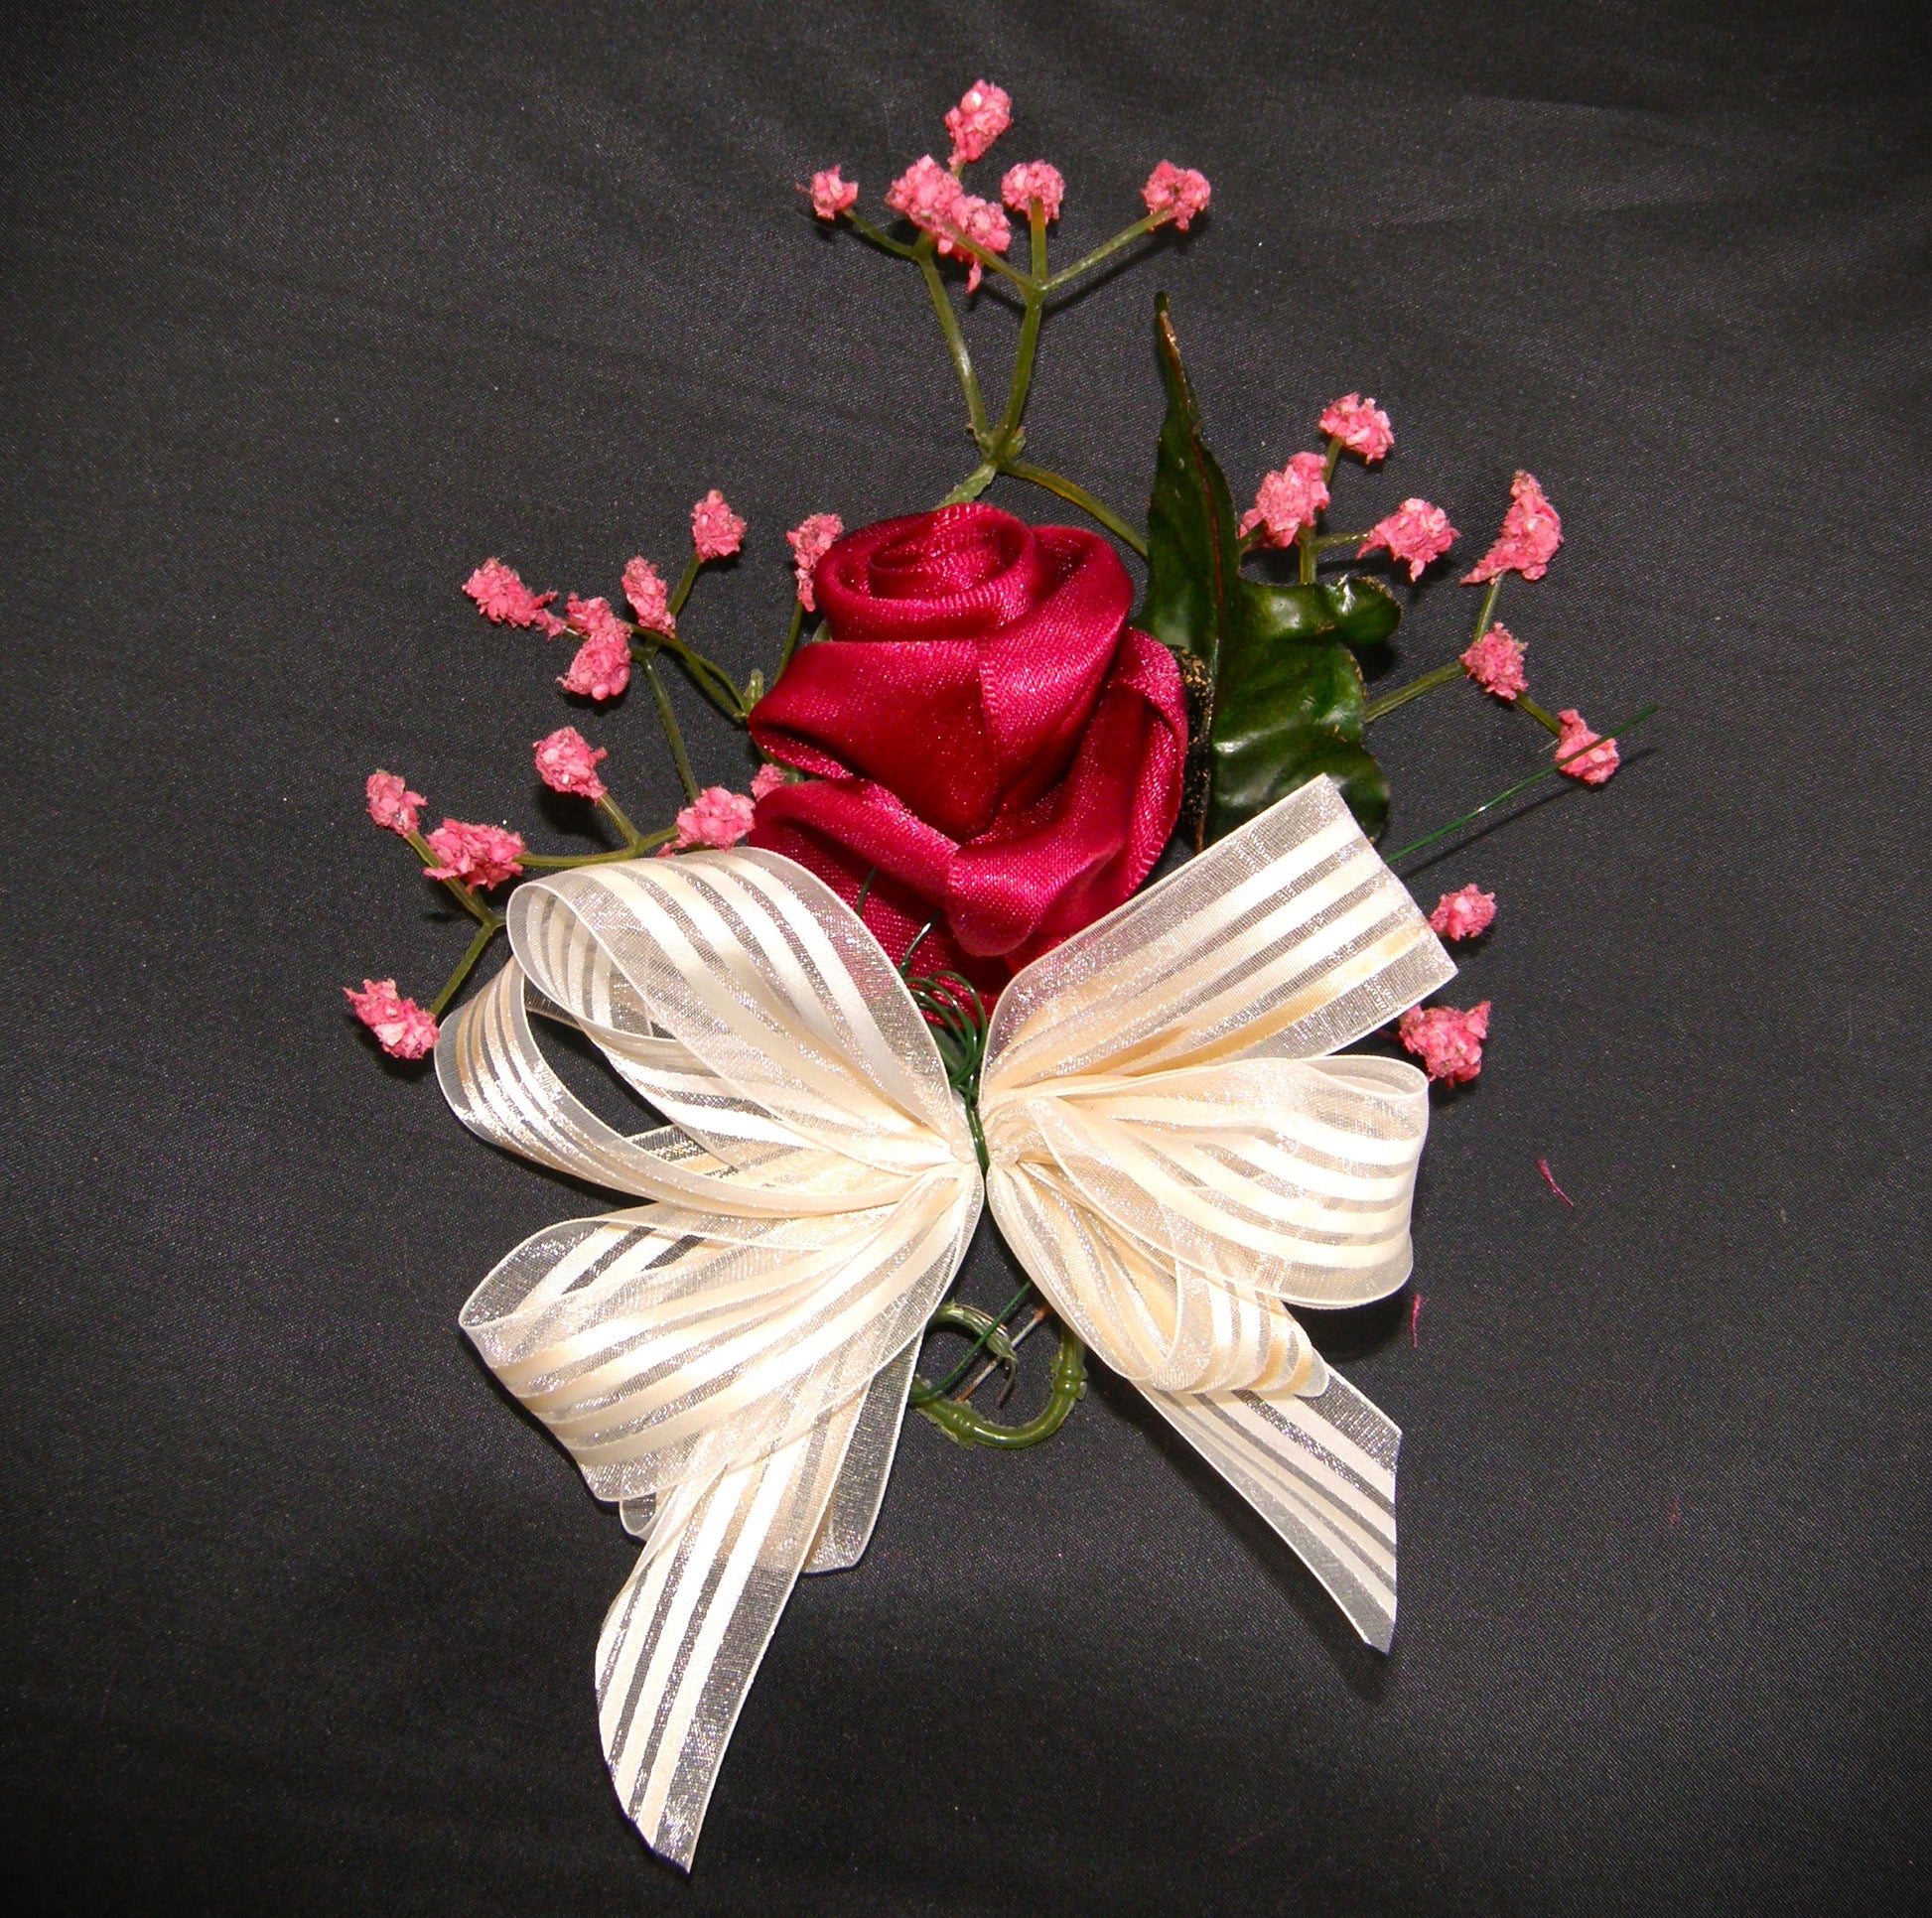 Limited Sale! Deluxe EZ Bow Maker with Ribbon Rose & Flower Maker Dowel.